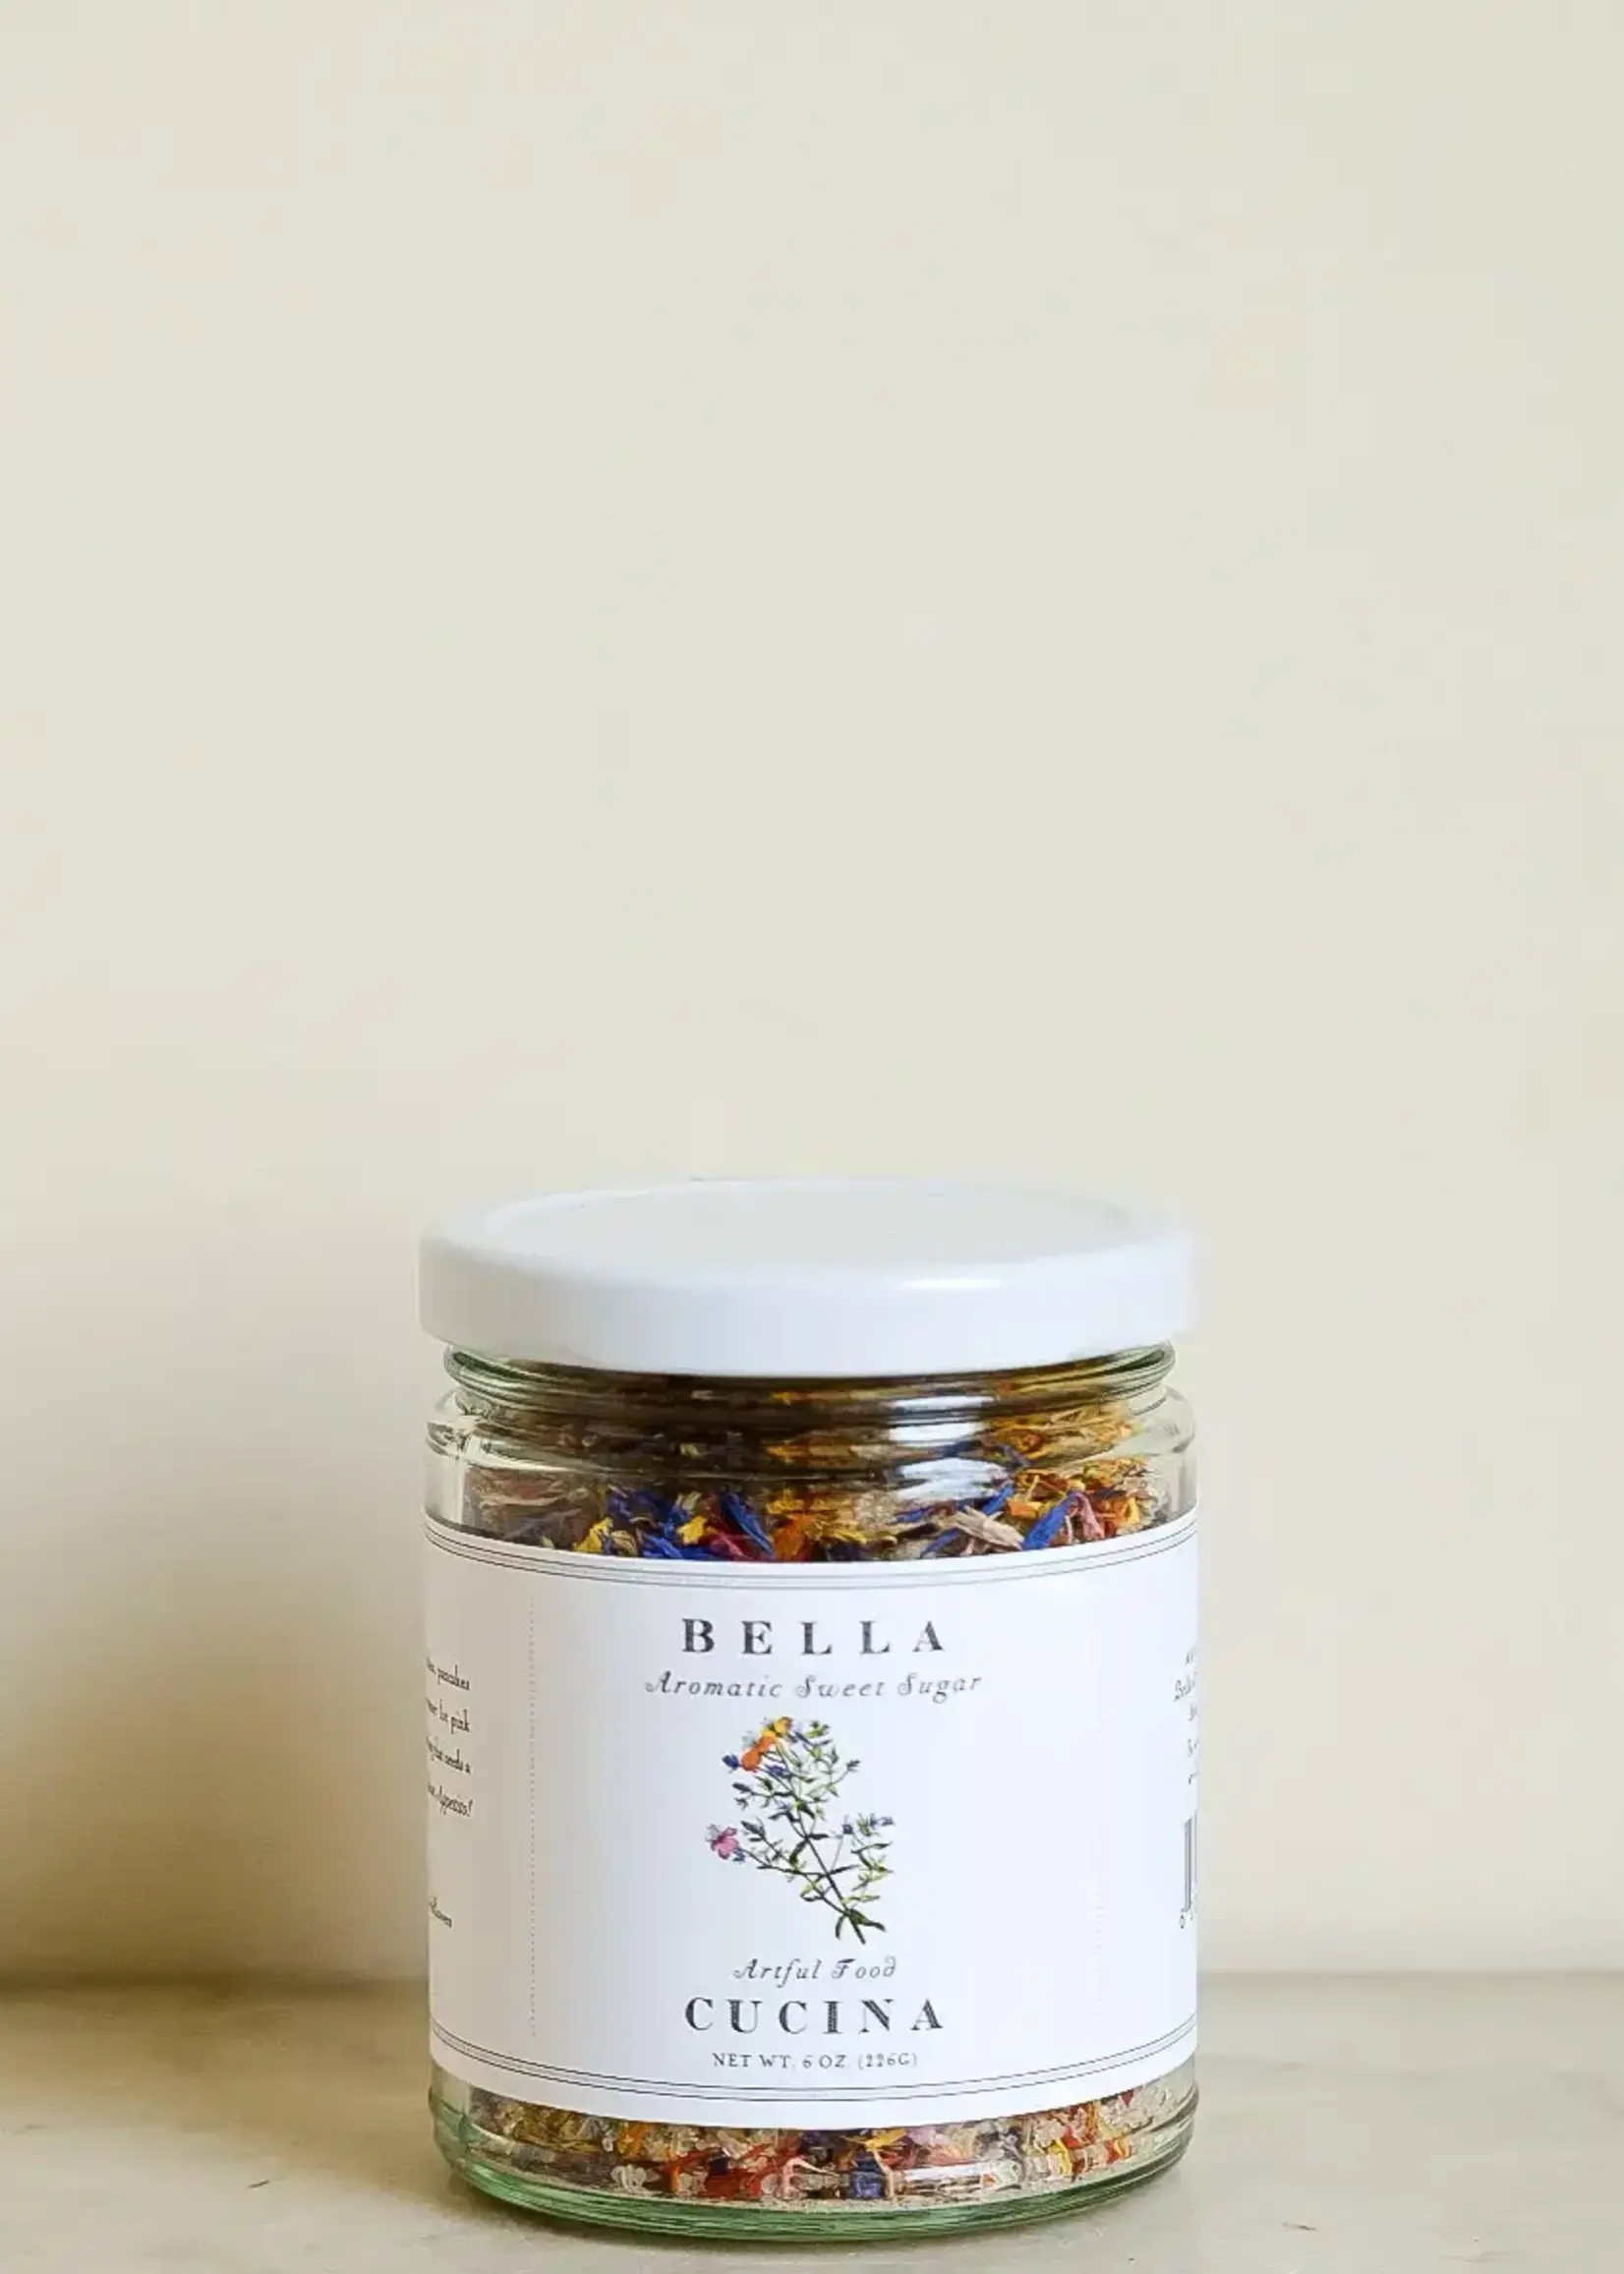 Bella Cucina Artful Food Limited Edition: Wildflower Aromatic Sugar